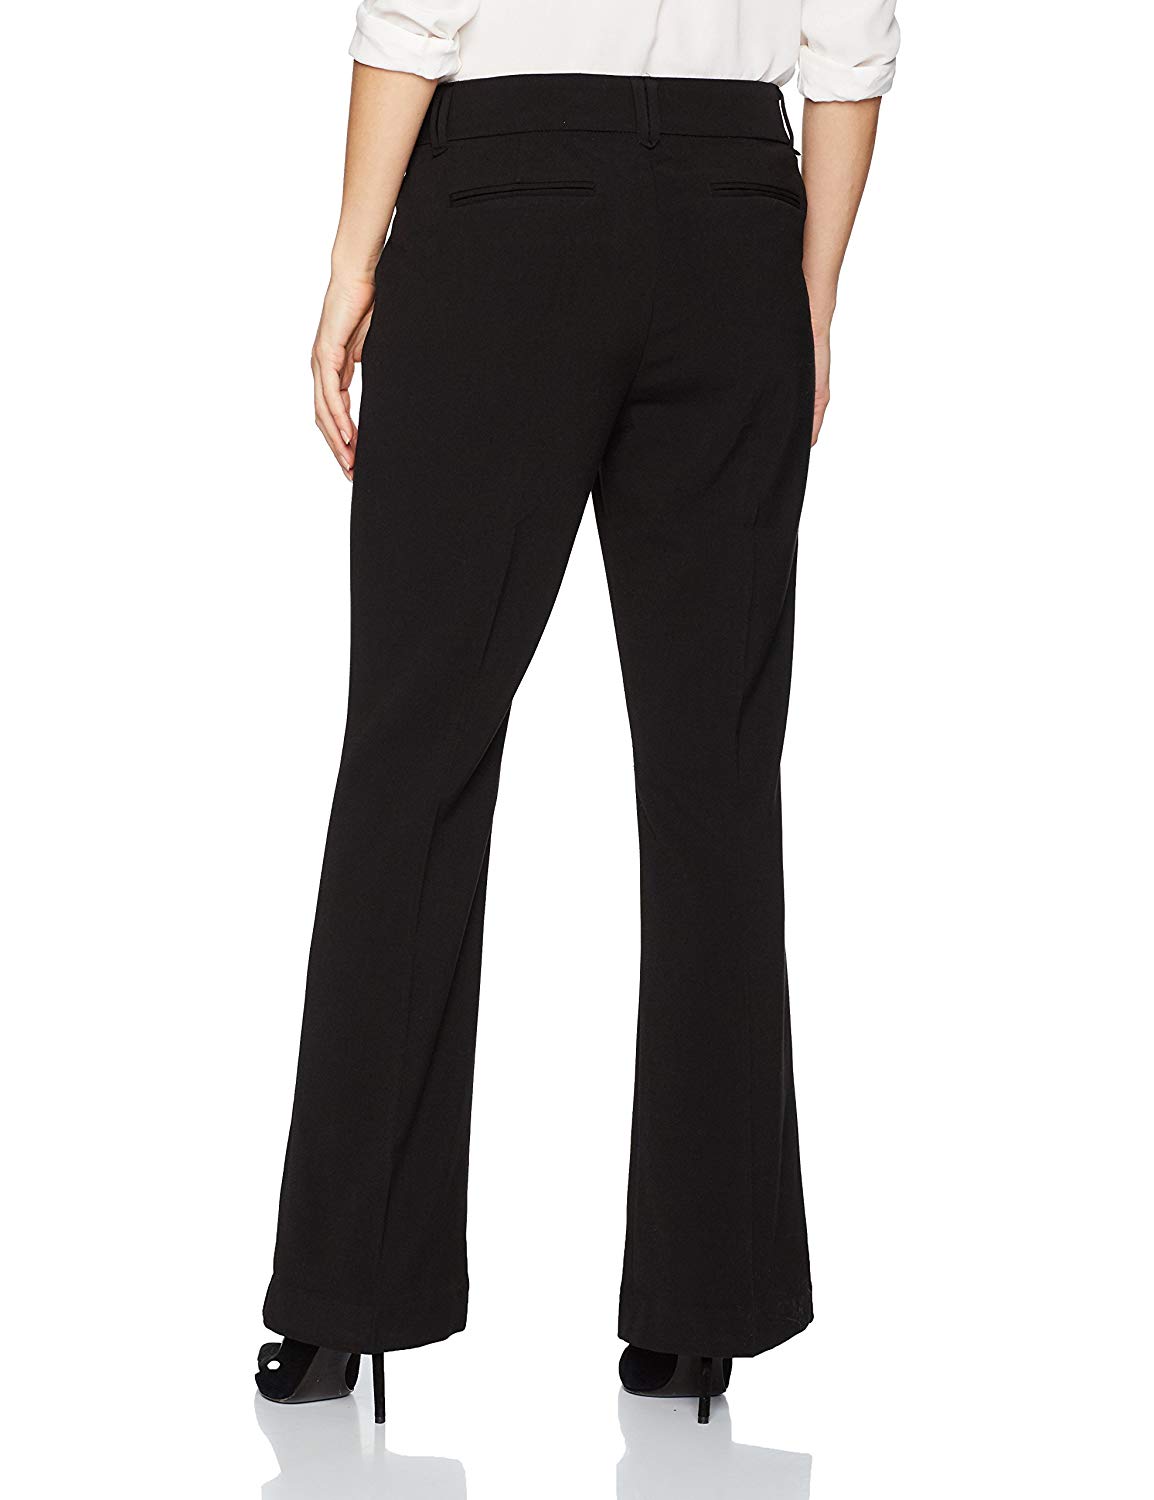 Briggs New York Womens Pants Black 8 Black Size Fpew Ebay